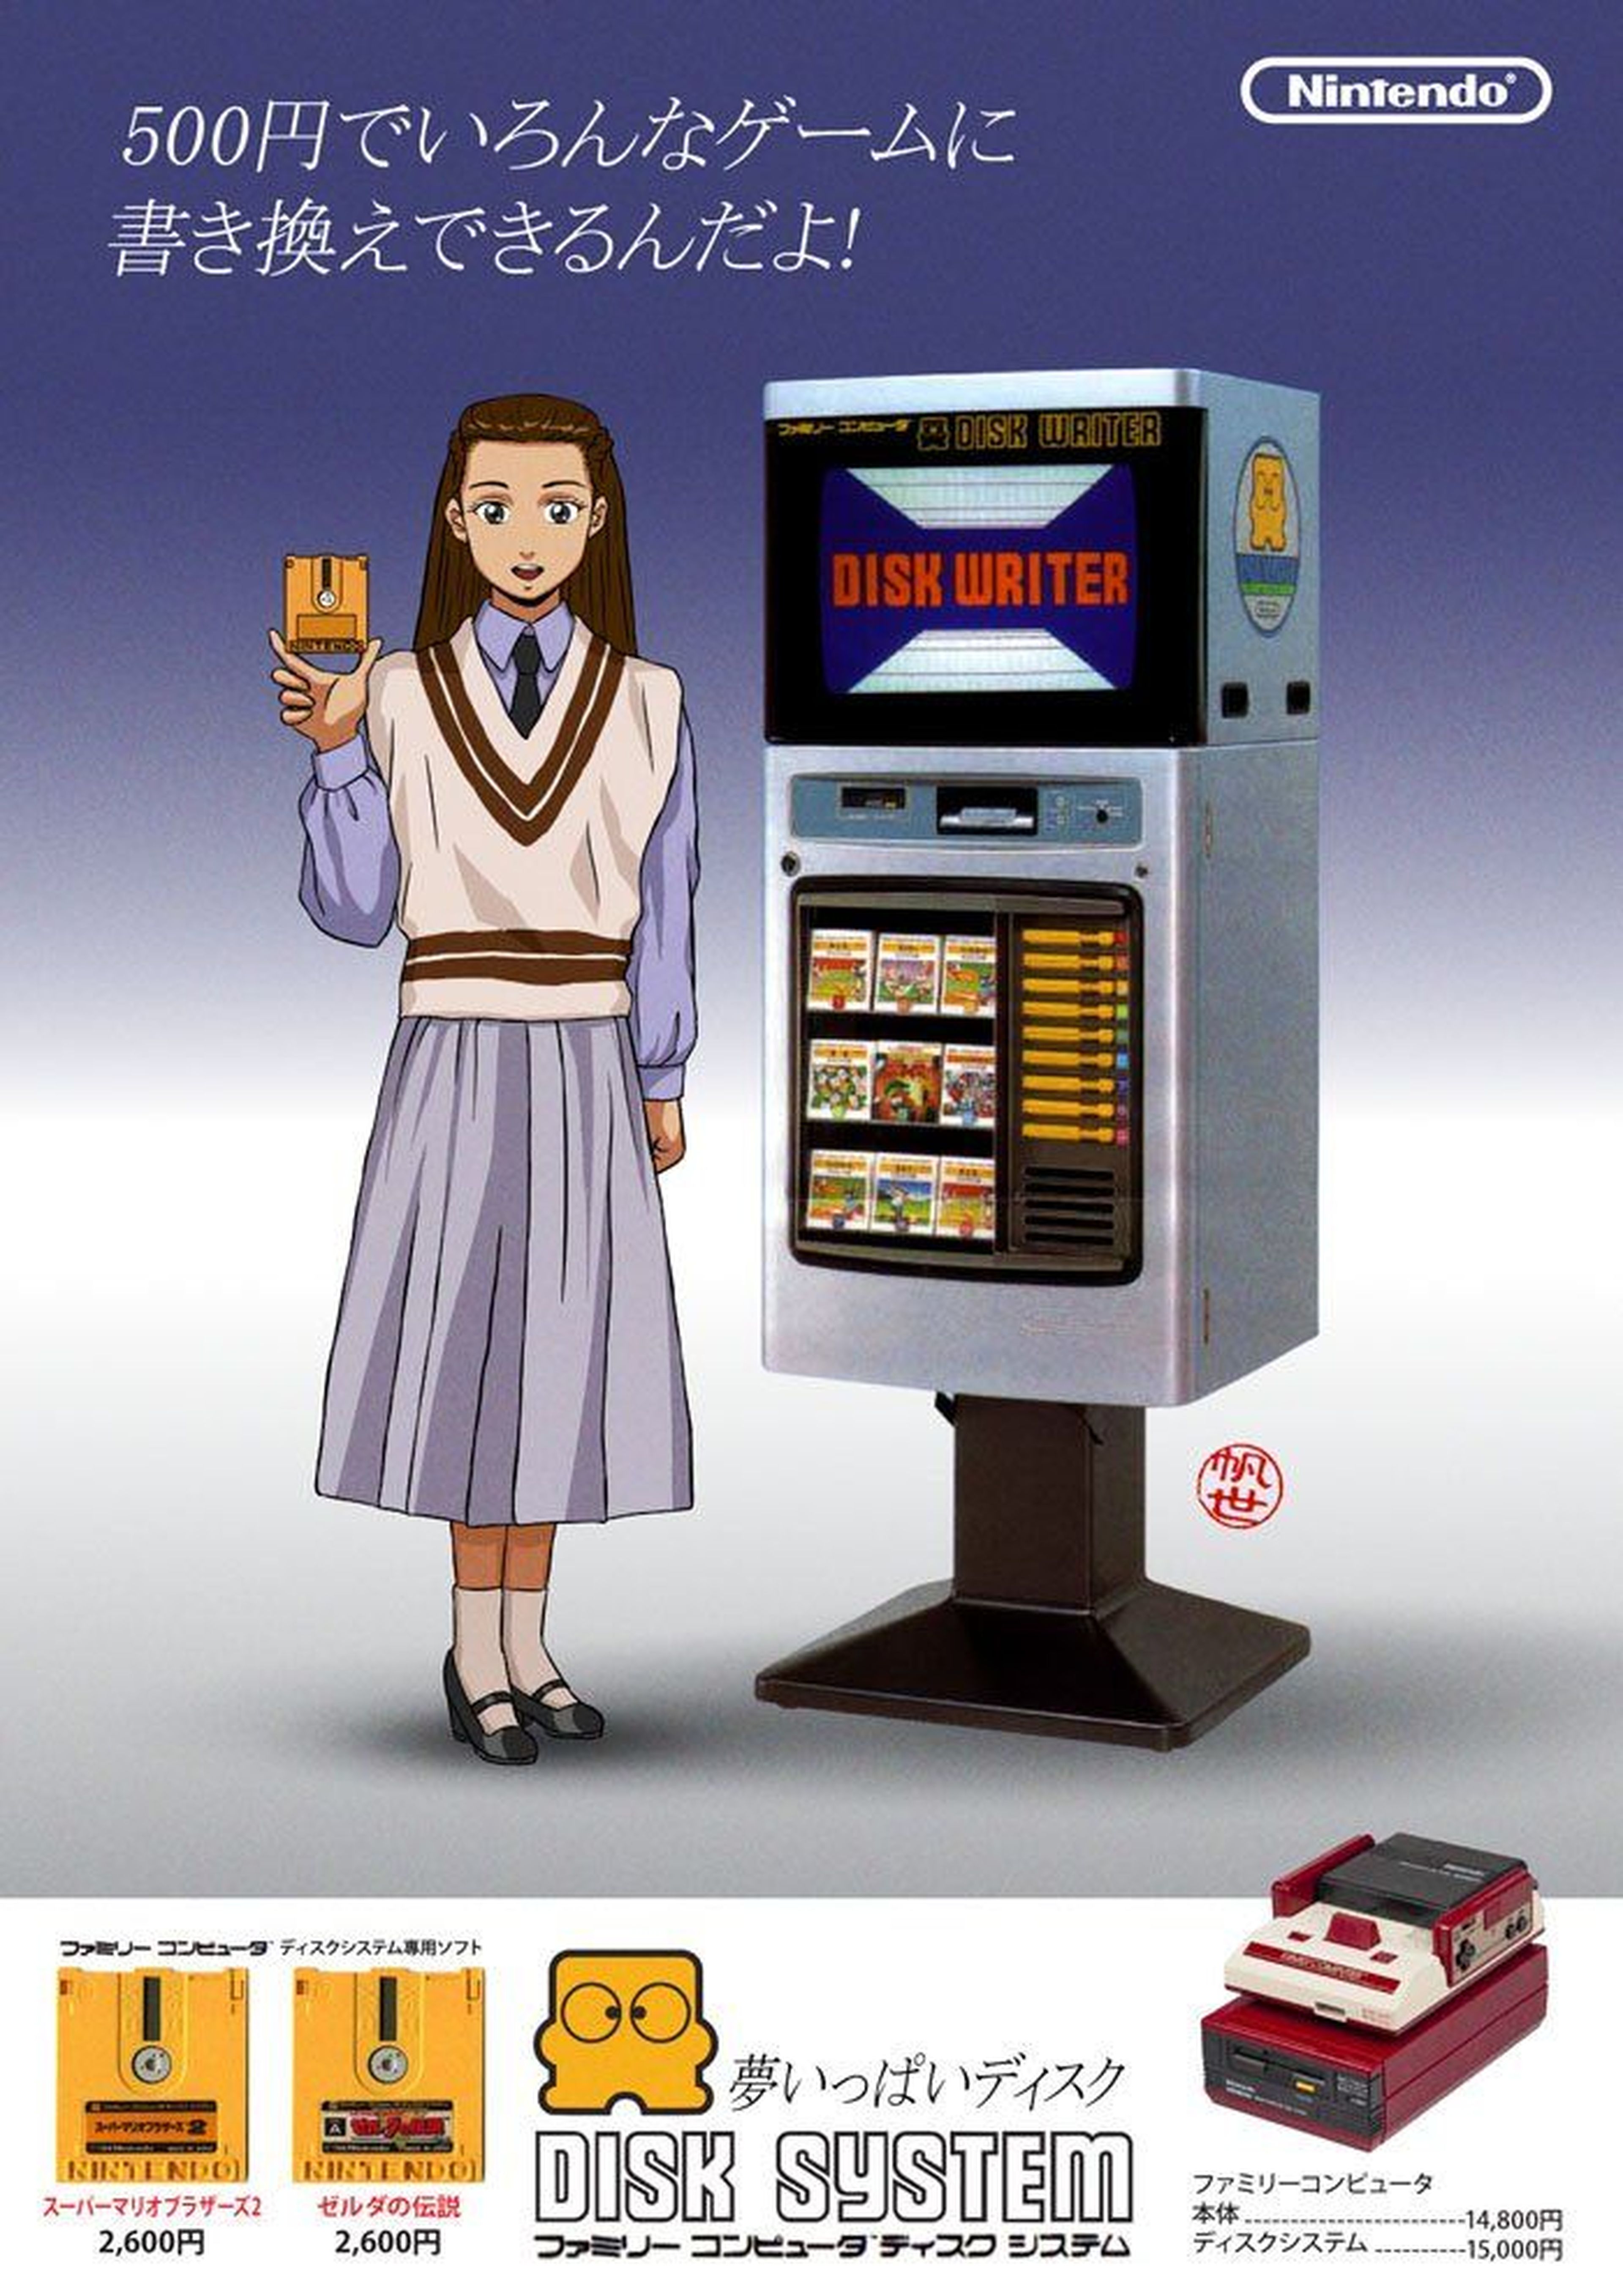 Tio Bruno Famicom Disk System Kiosko